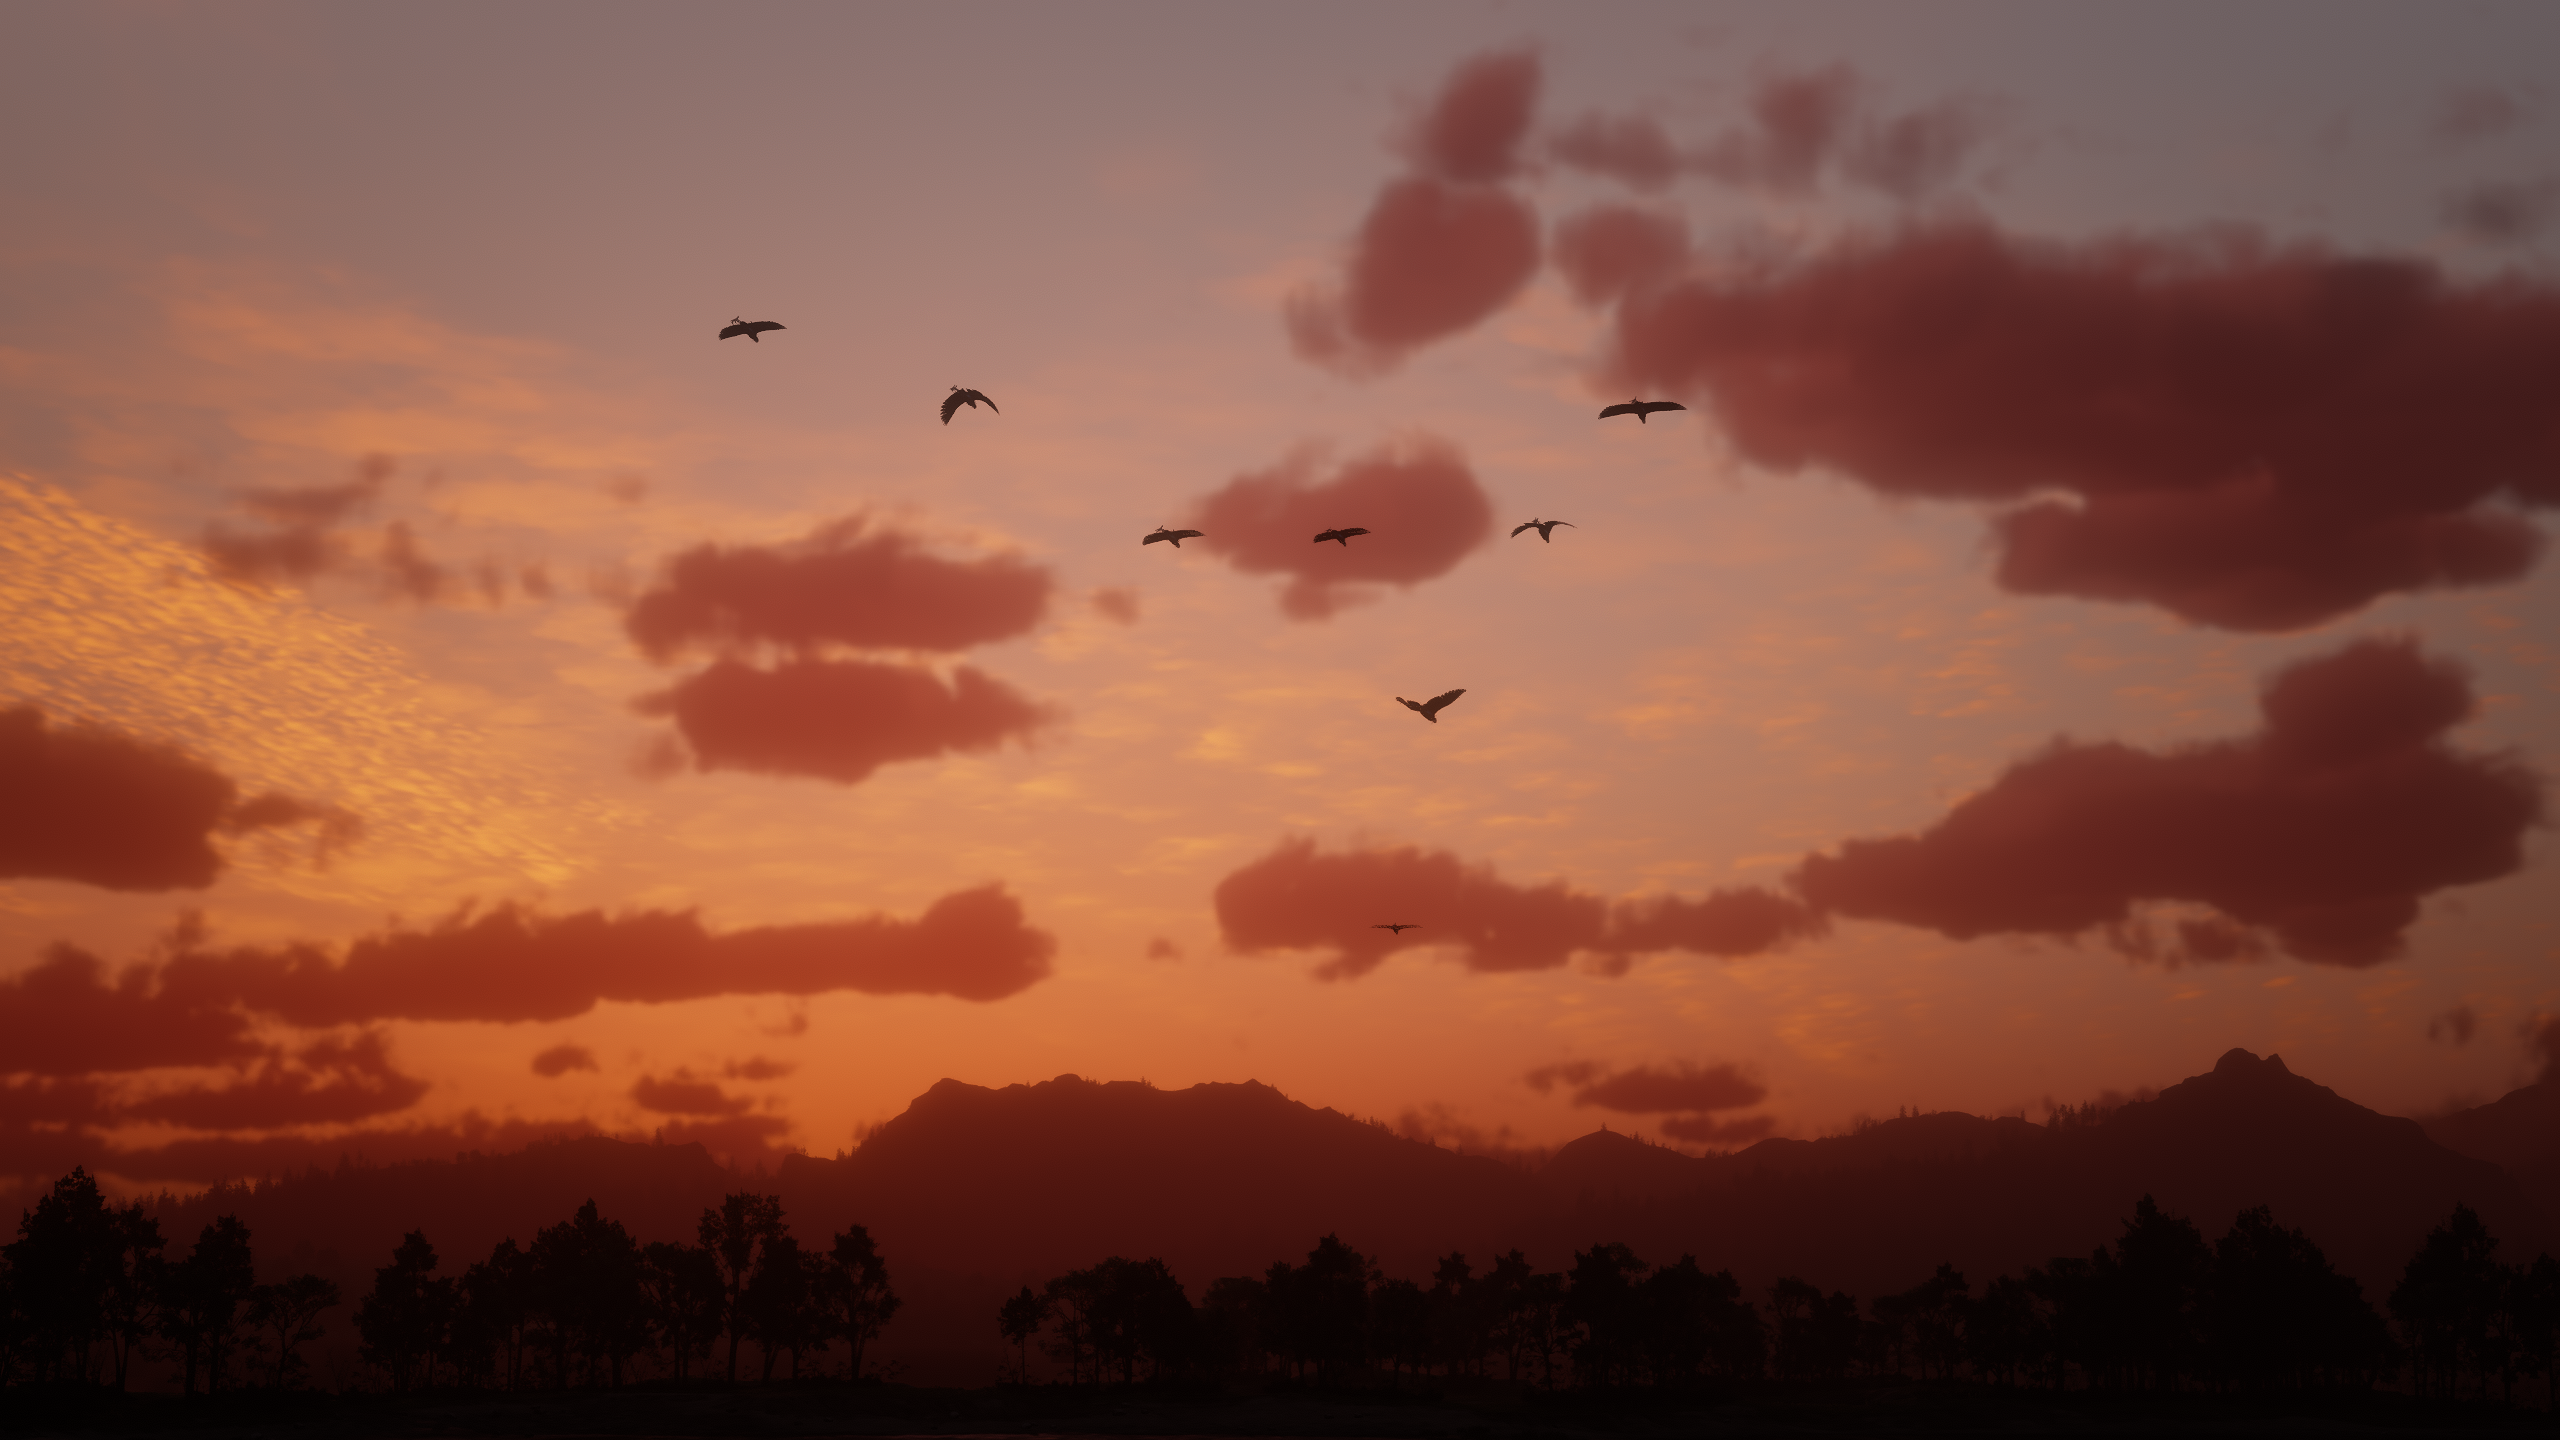 Red Dead Redemption 2 Red Dead Redemption Ii Video Games Video Game Landscape Sunset Forest 2560x1440